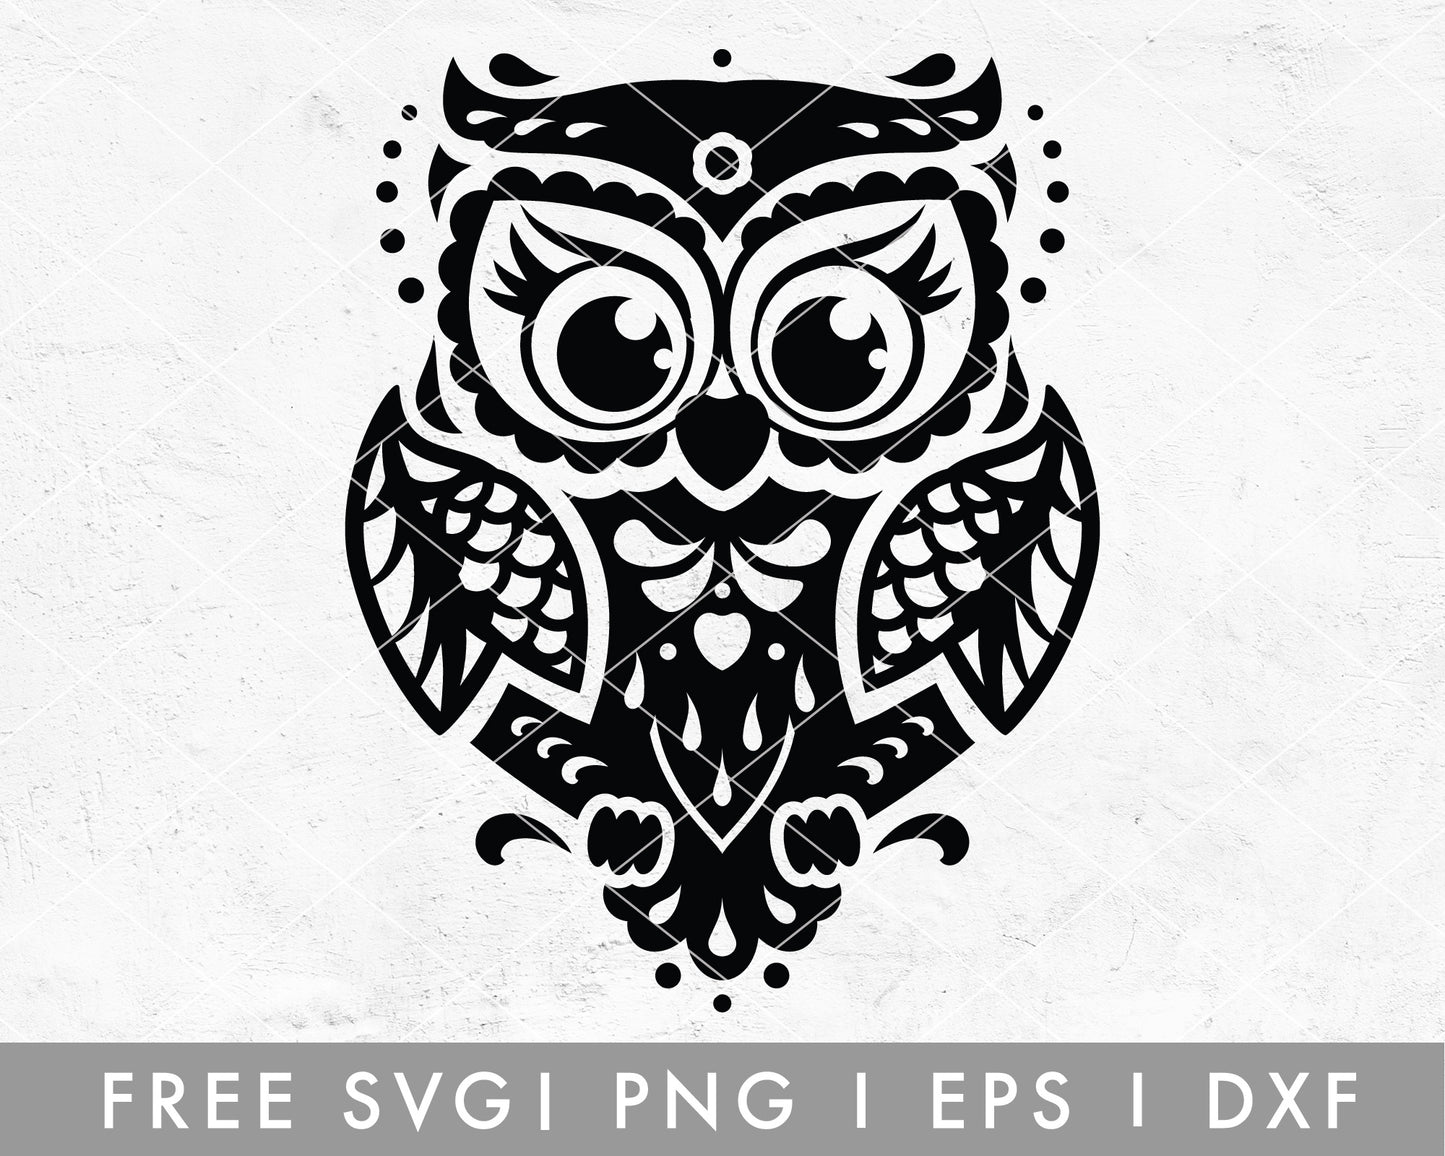 FREE FREE Mandala SVG | Mandala Owl SVG Cut File for Cricut, Cameo Silhouette | Free SVG Cut File